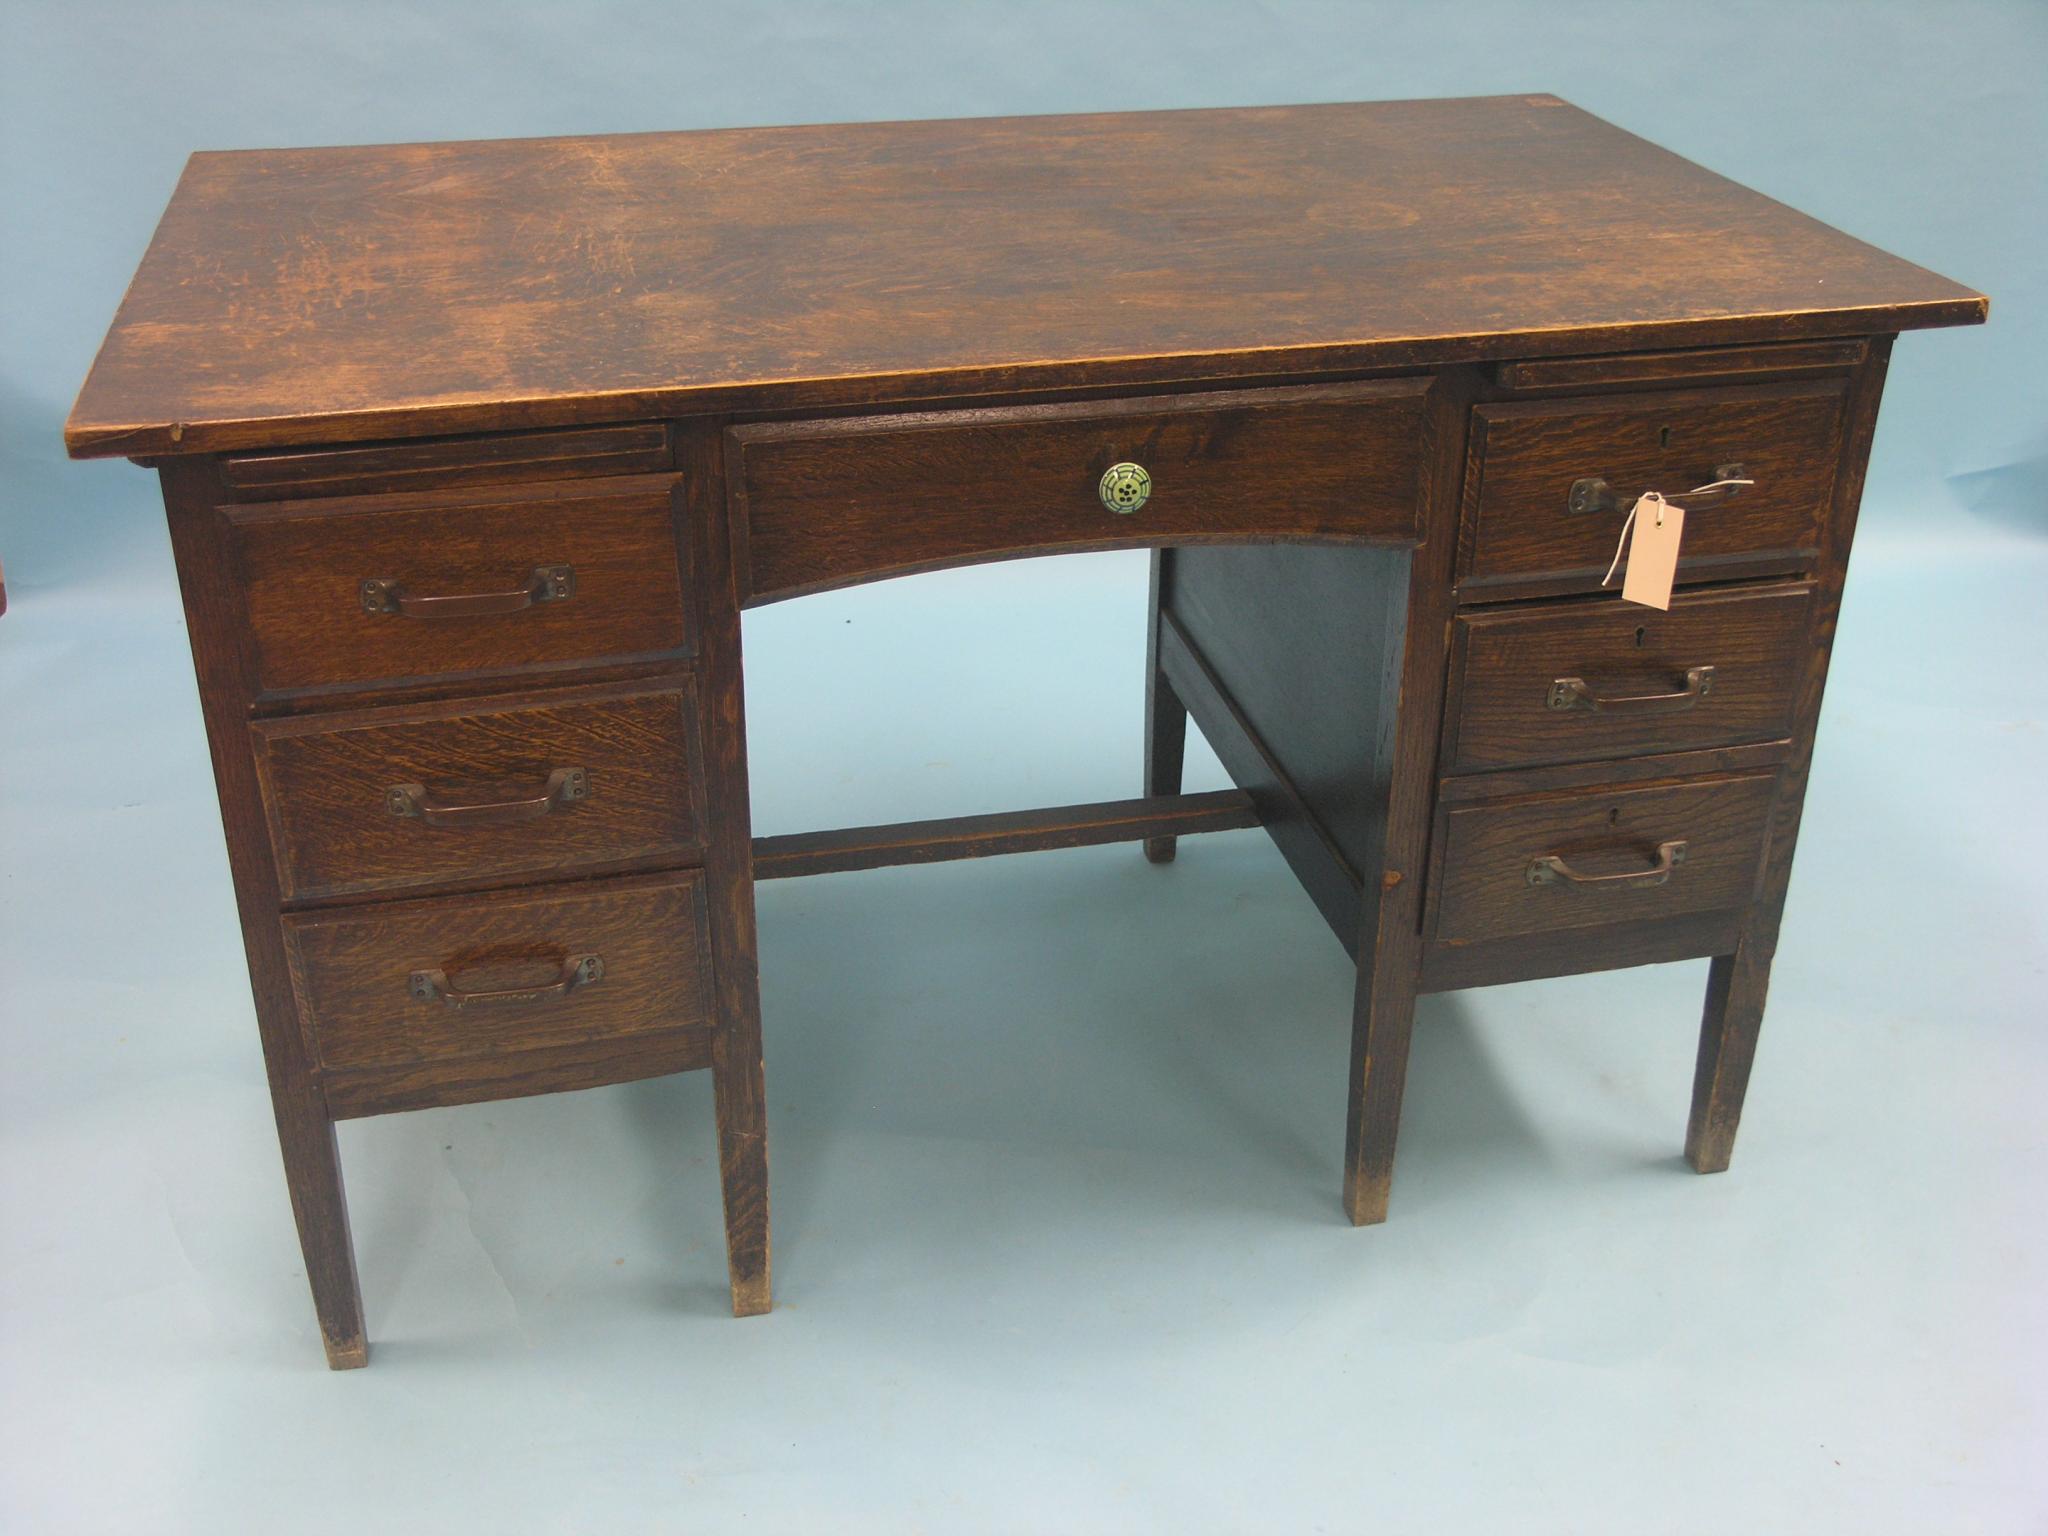 An early 20th century dark oak office desk, kneehole arrangement of six drawers, 4ft. - top marked